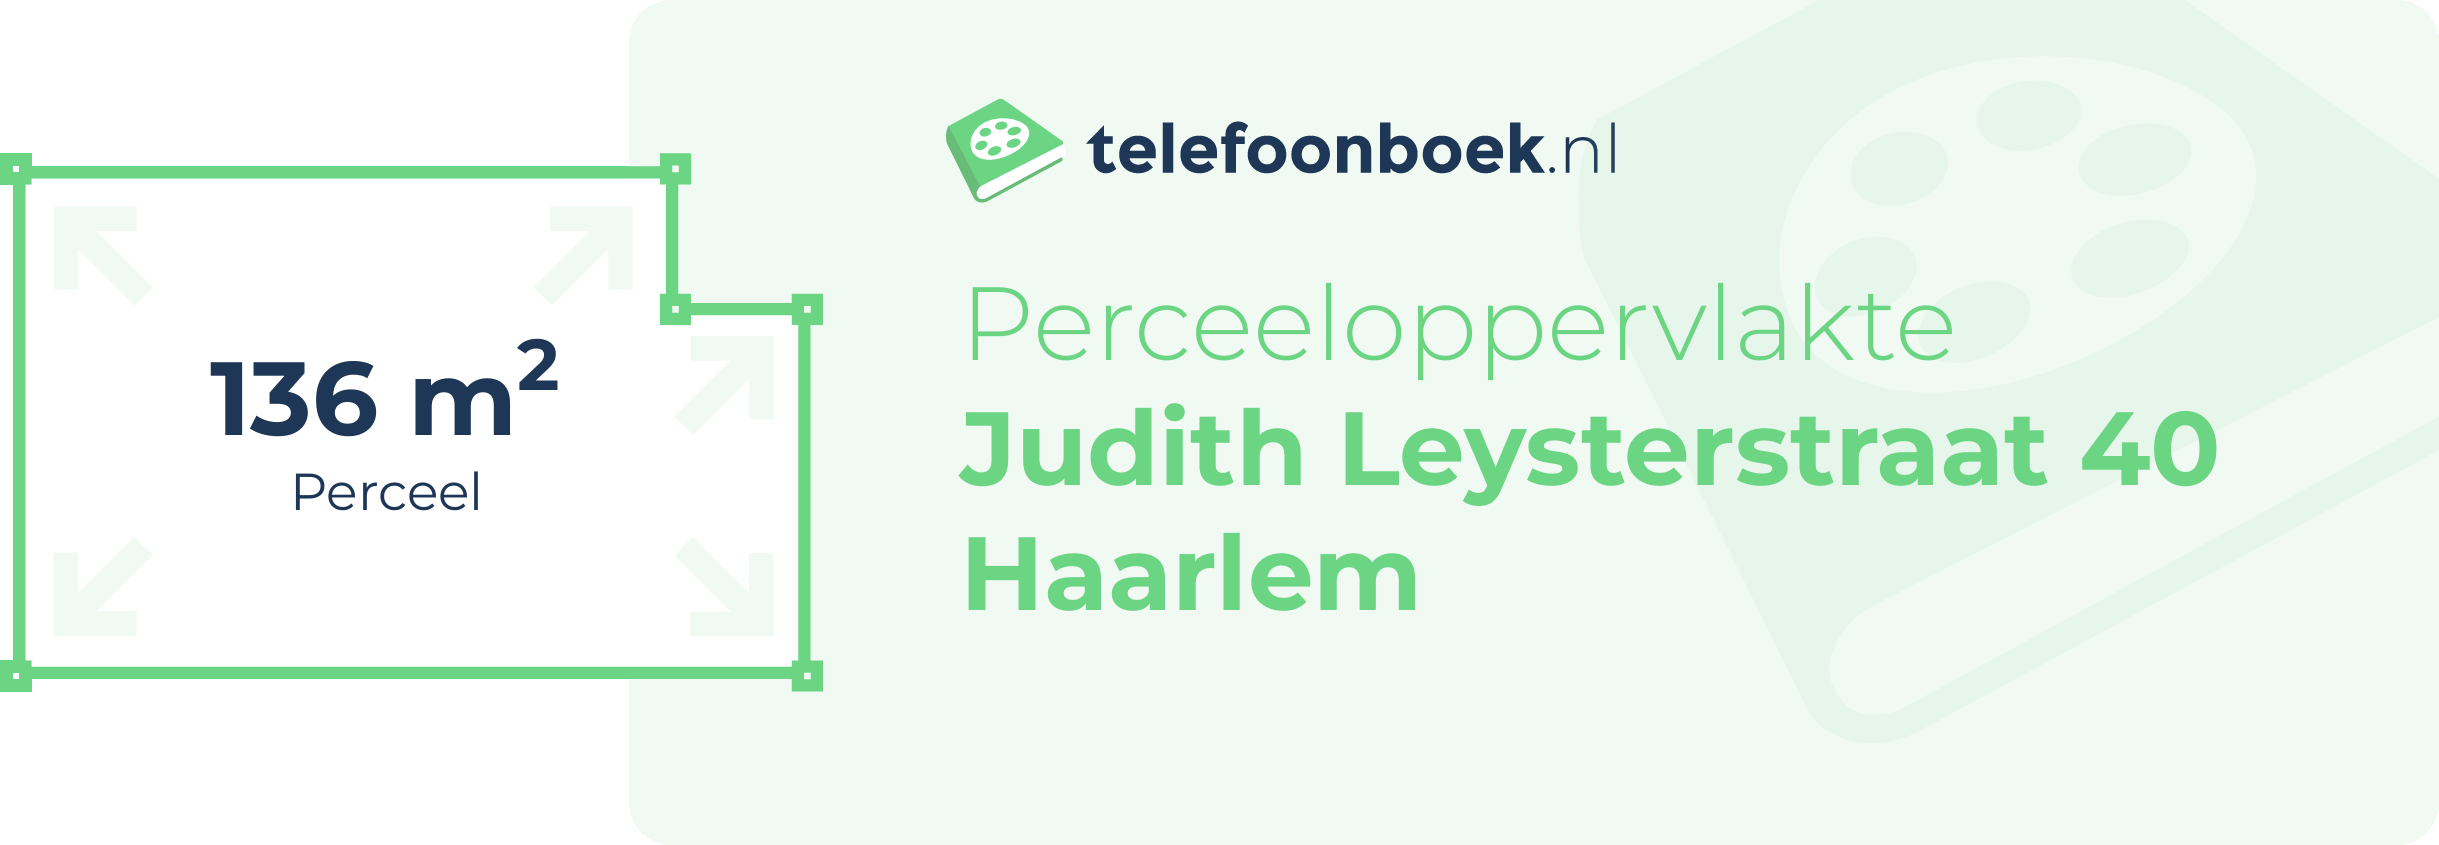 Perceeloppervlakte Judith Leysterstraat 40 Haarlem